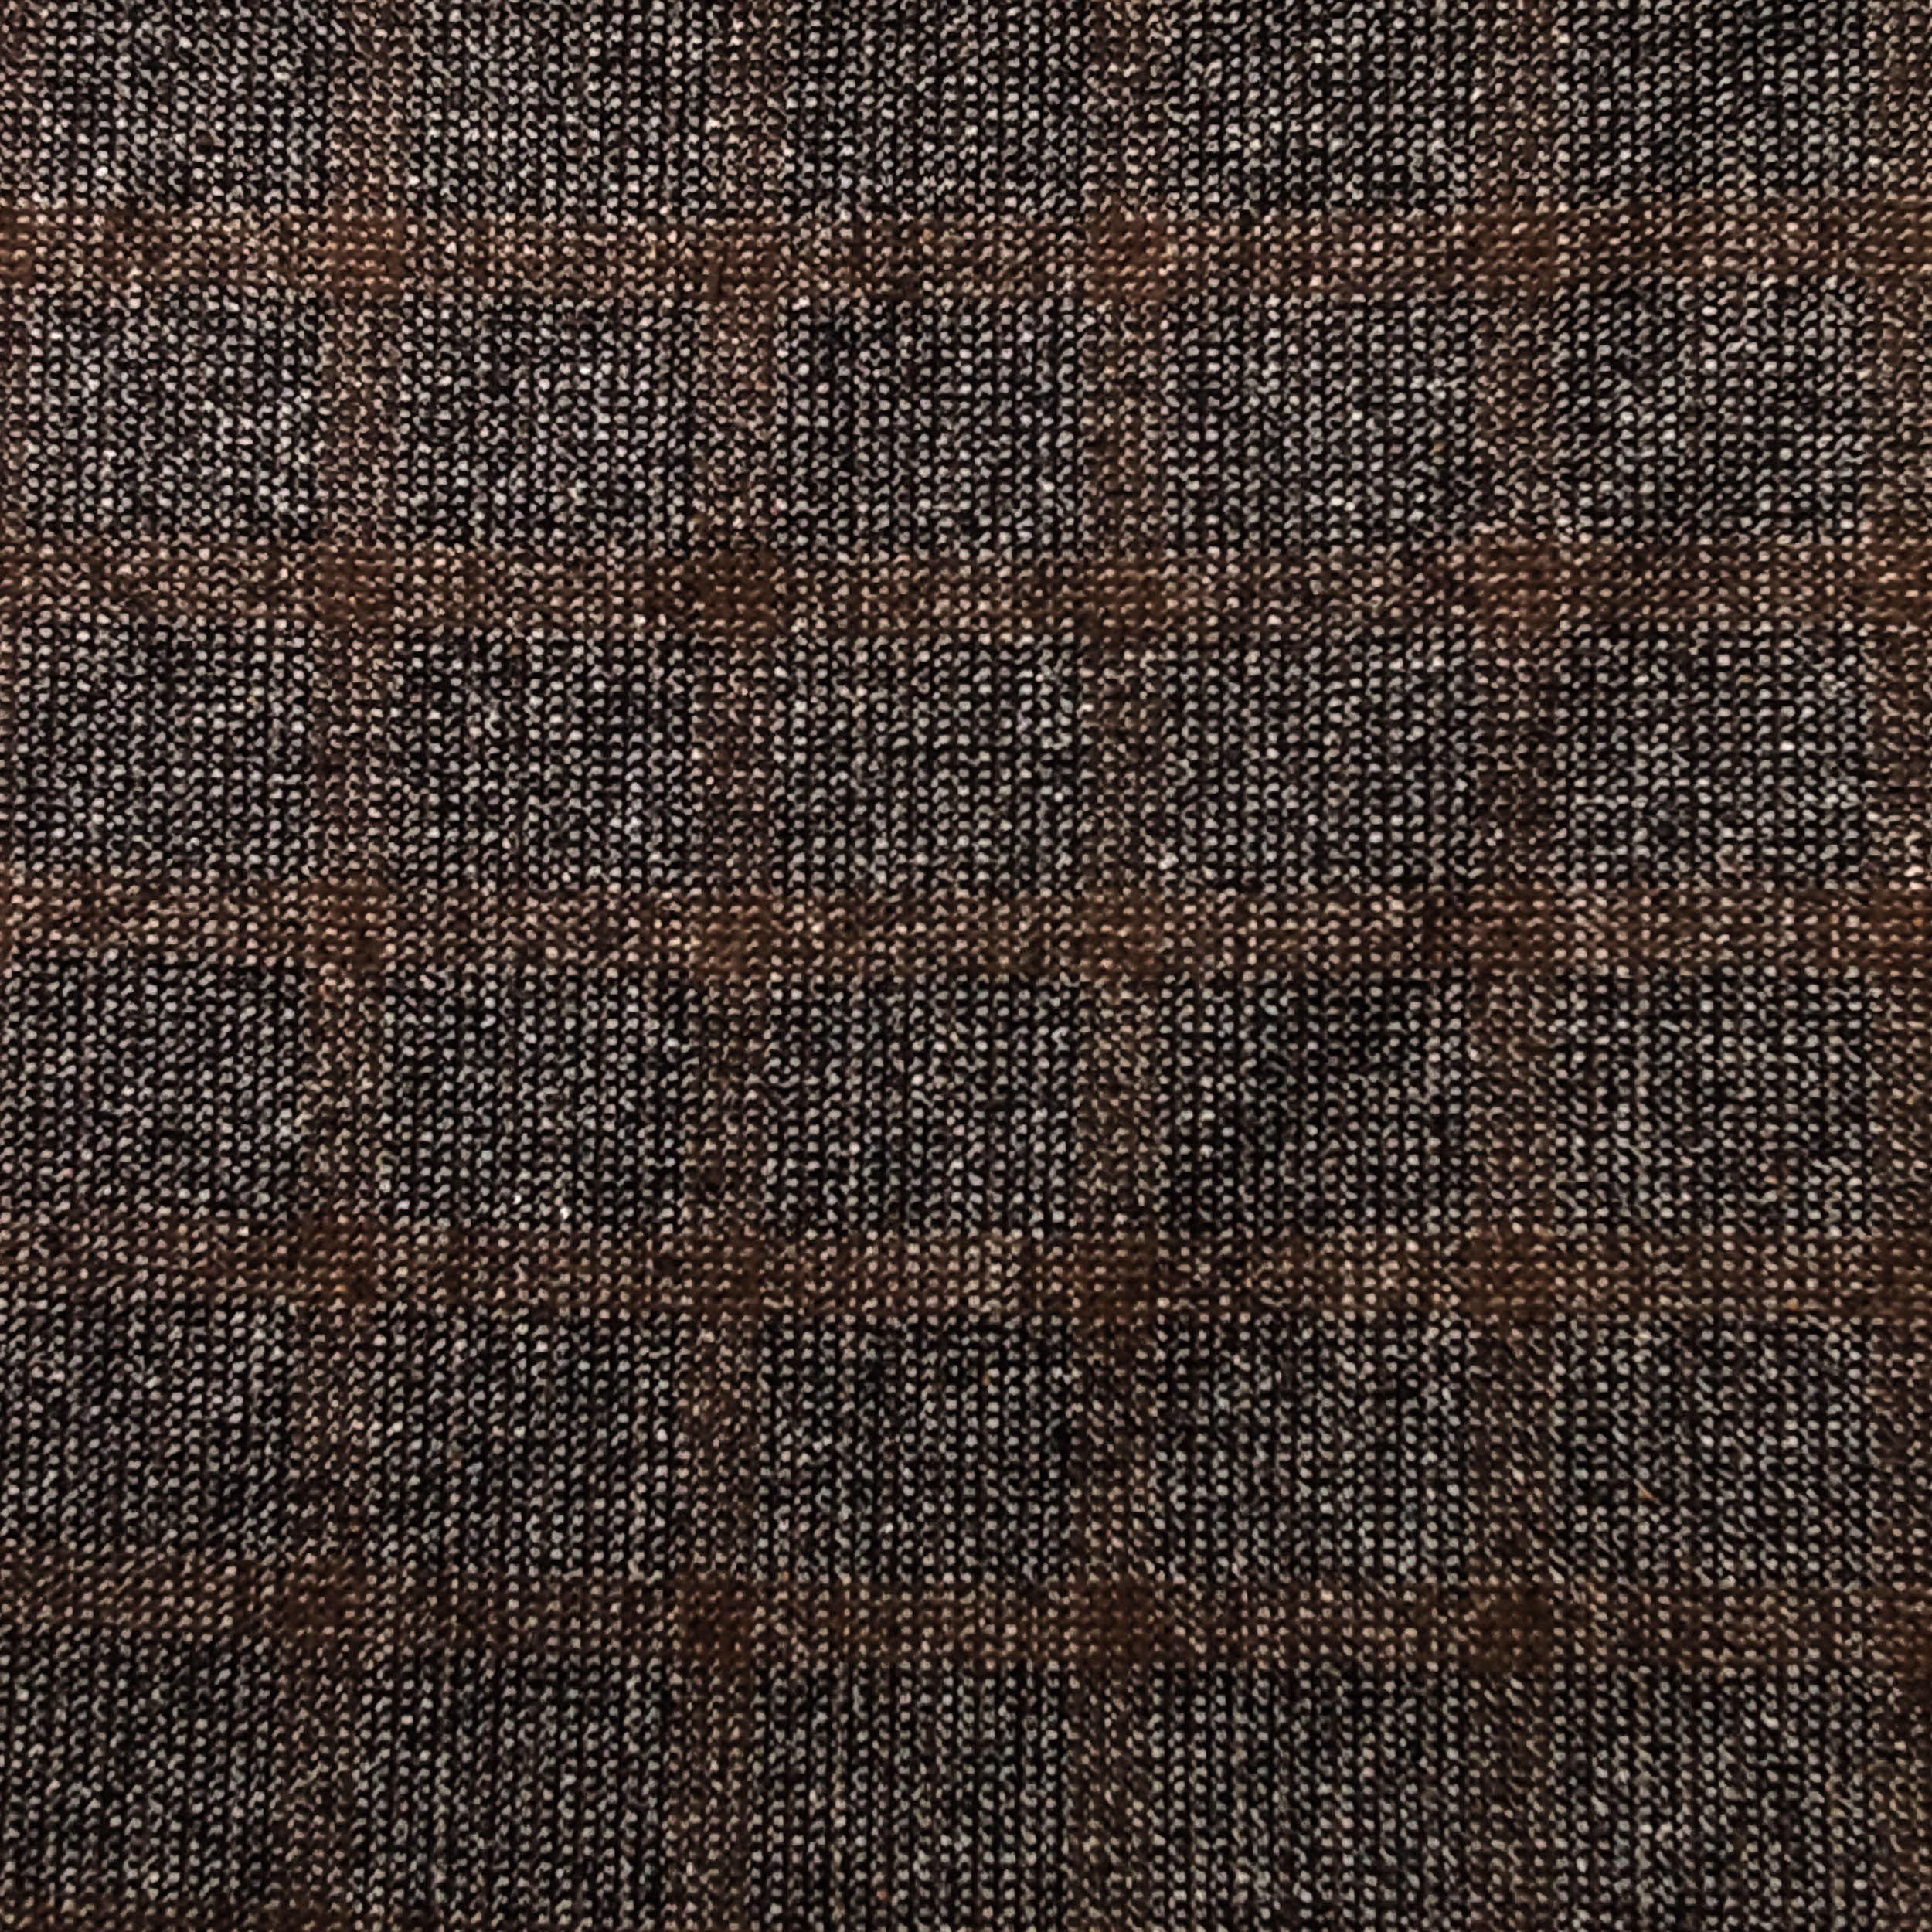 neoprene accoppiato tartan in lana e grigio